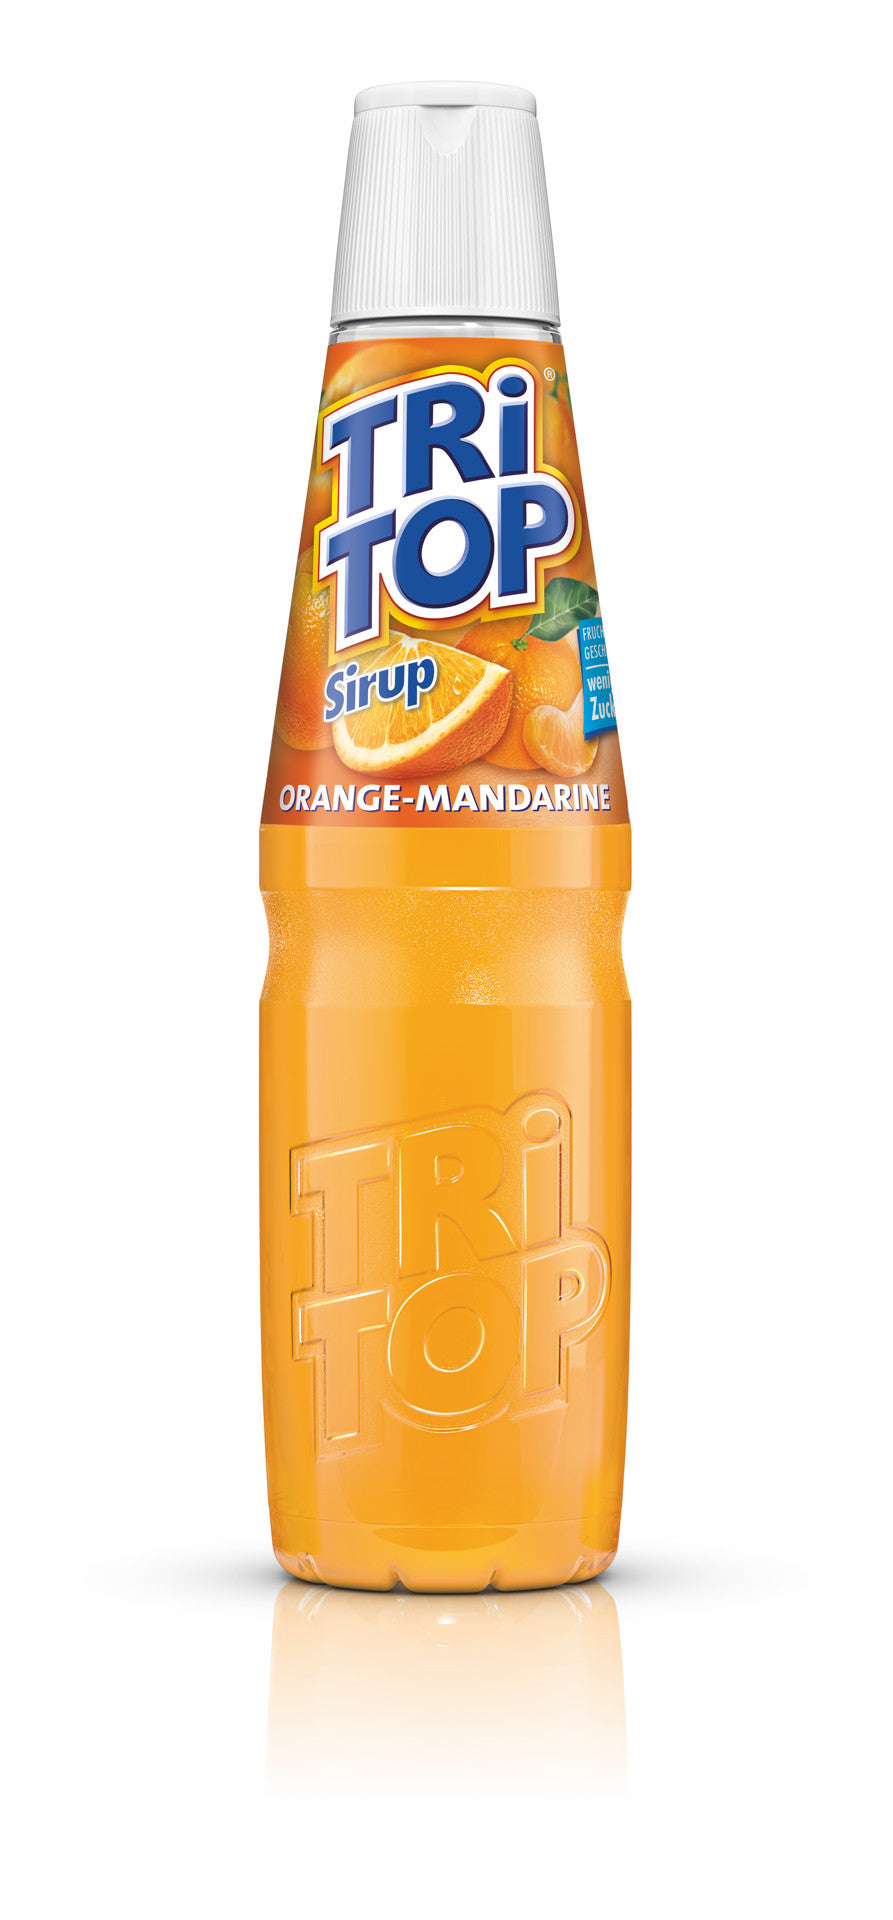 TRi TOP Sirup Orange-Mandarine 0,6L